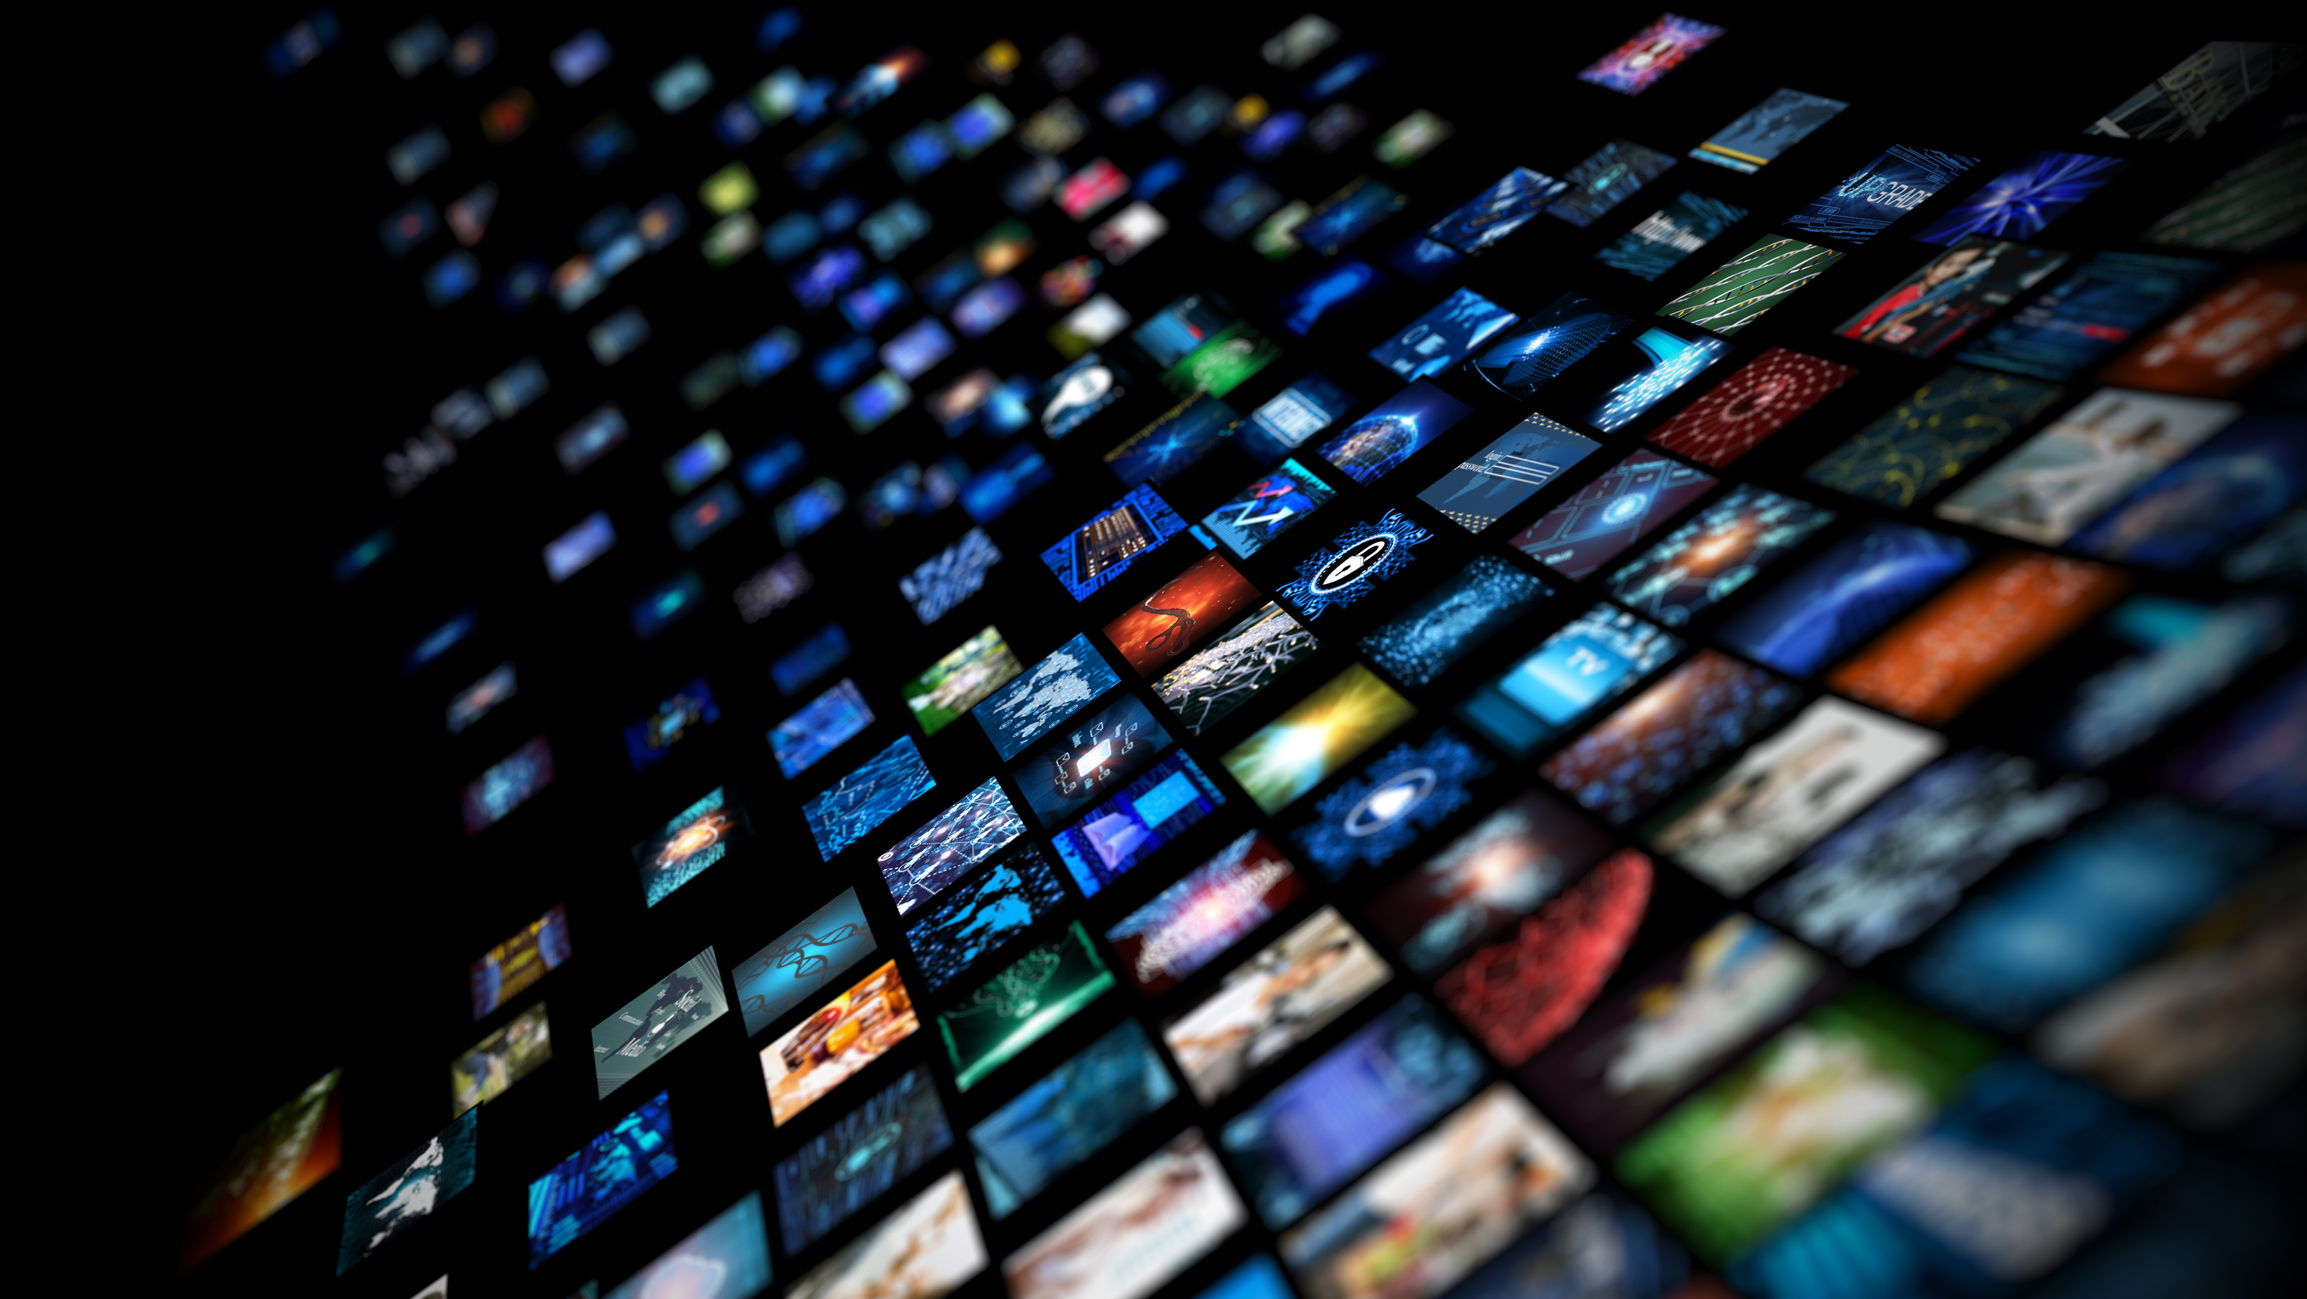 VideoAmp Explores How “Quarantine Fatigue” is Shaping Viewing Behavior